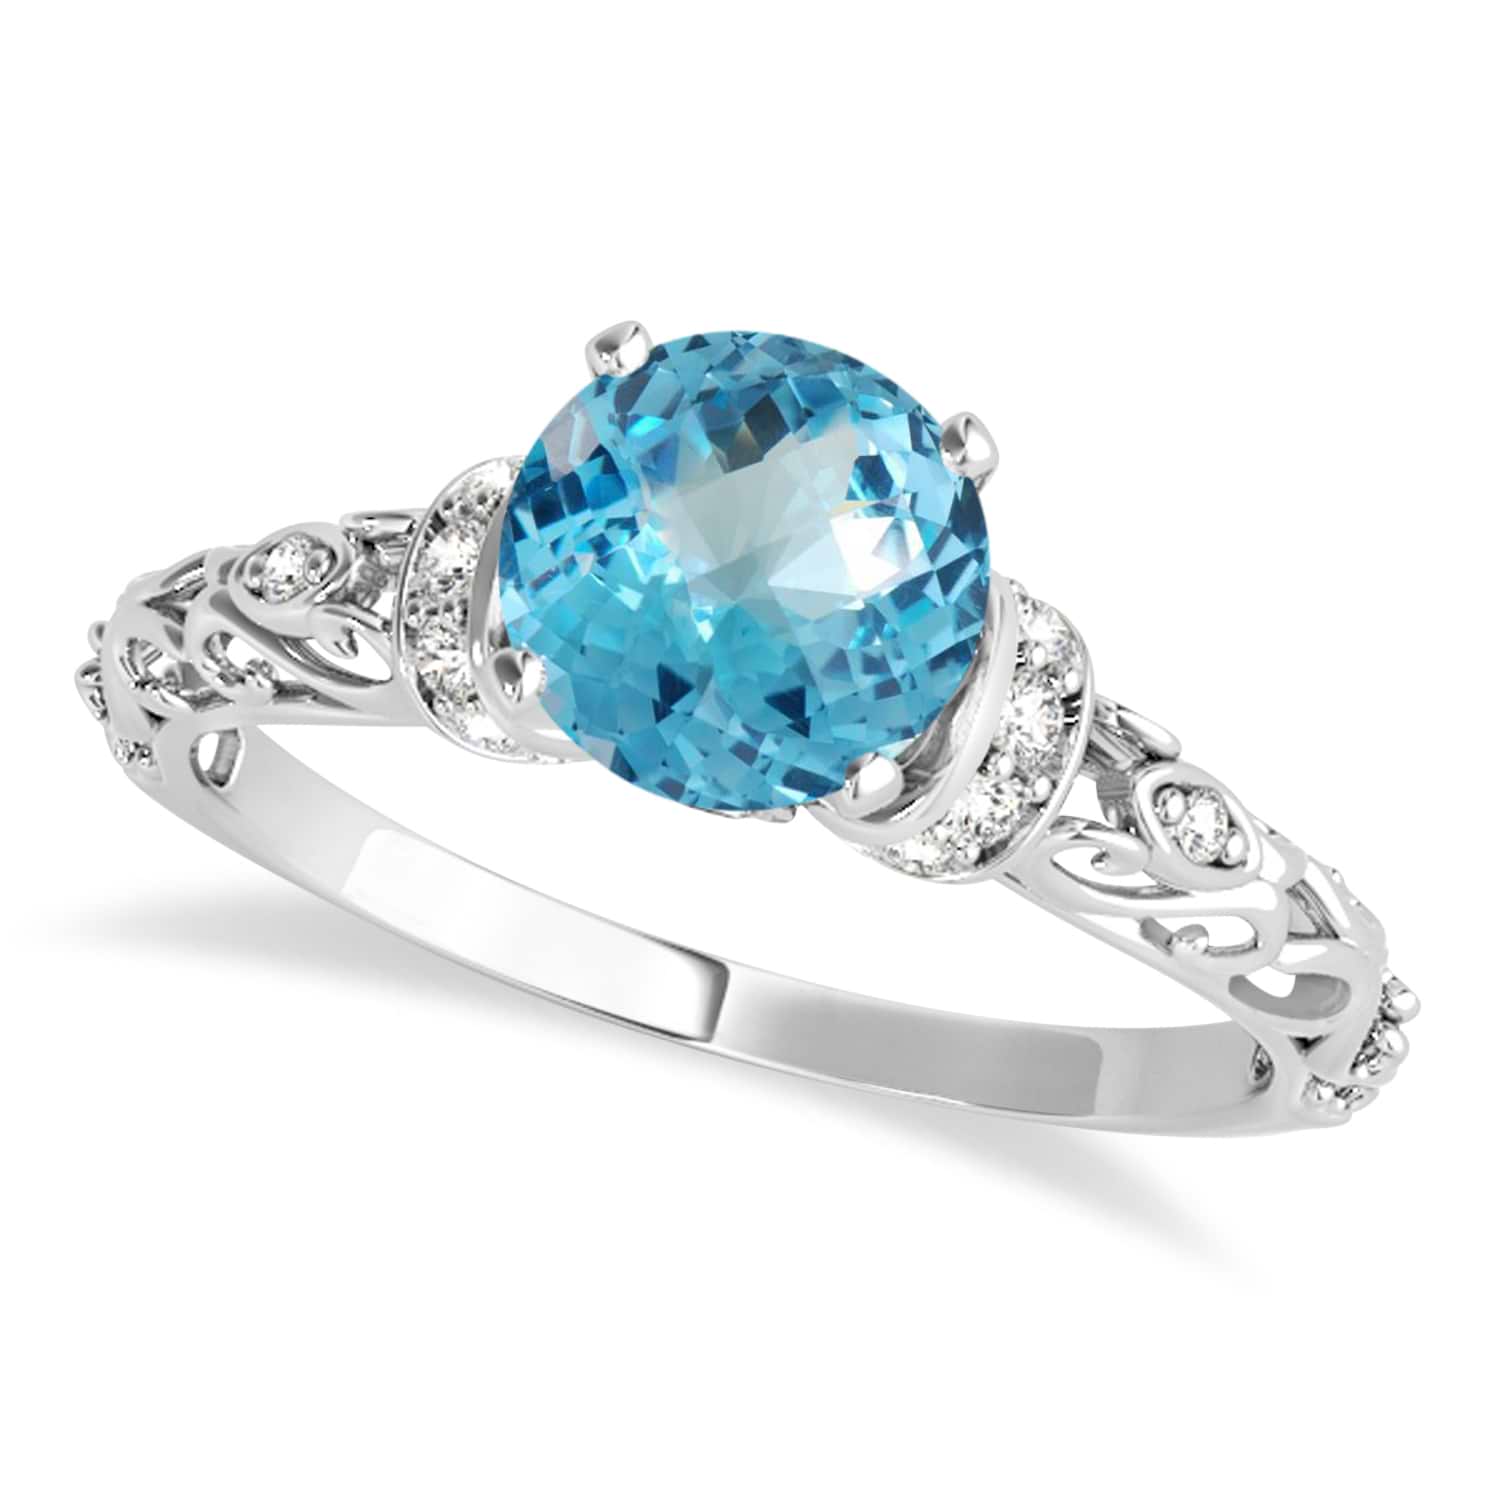 Blue Topaz & Diamond Antique Style Engagement Ring Platinum (0.87ct)